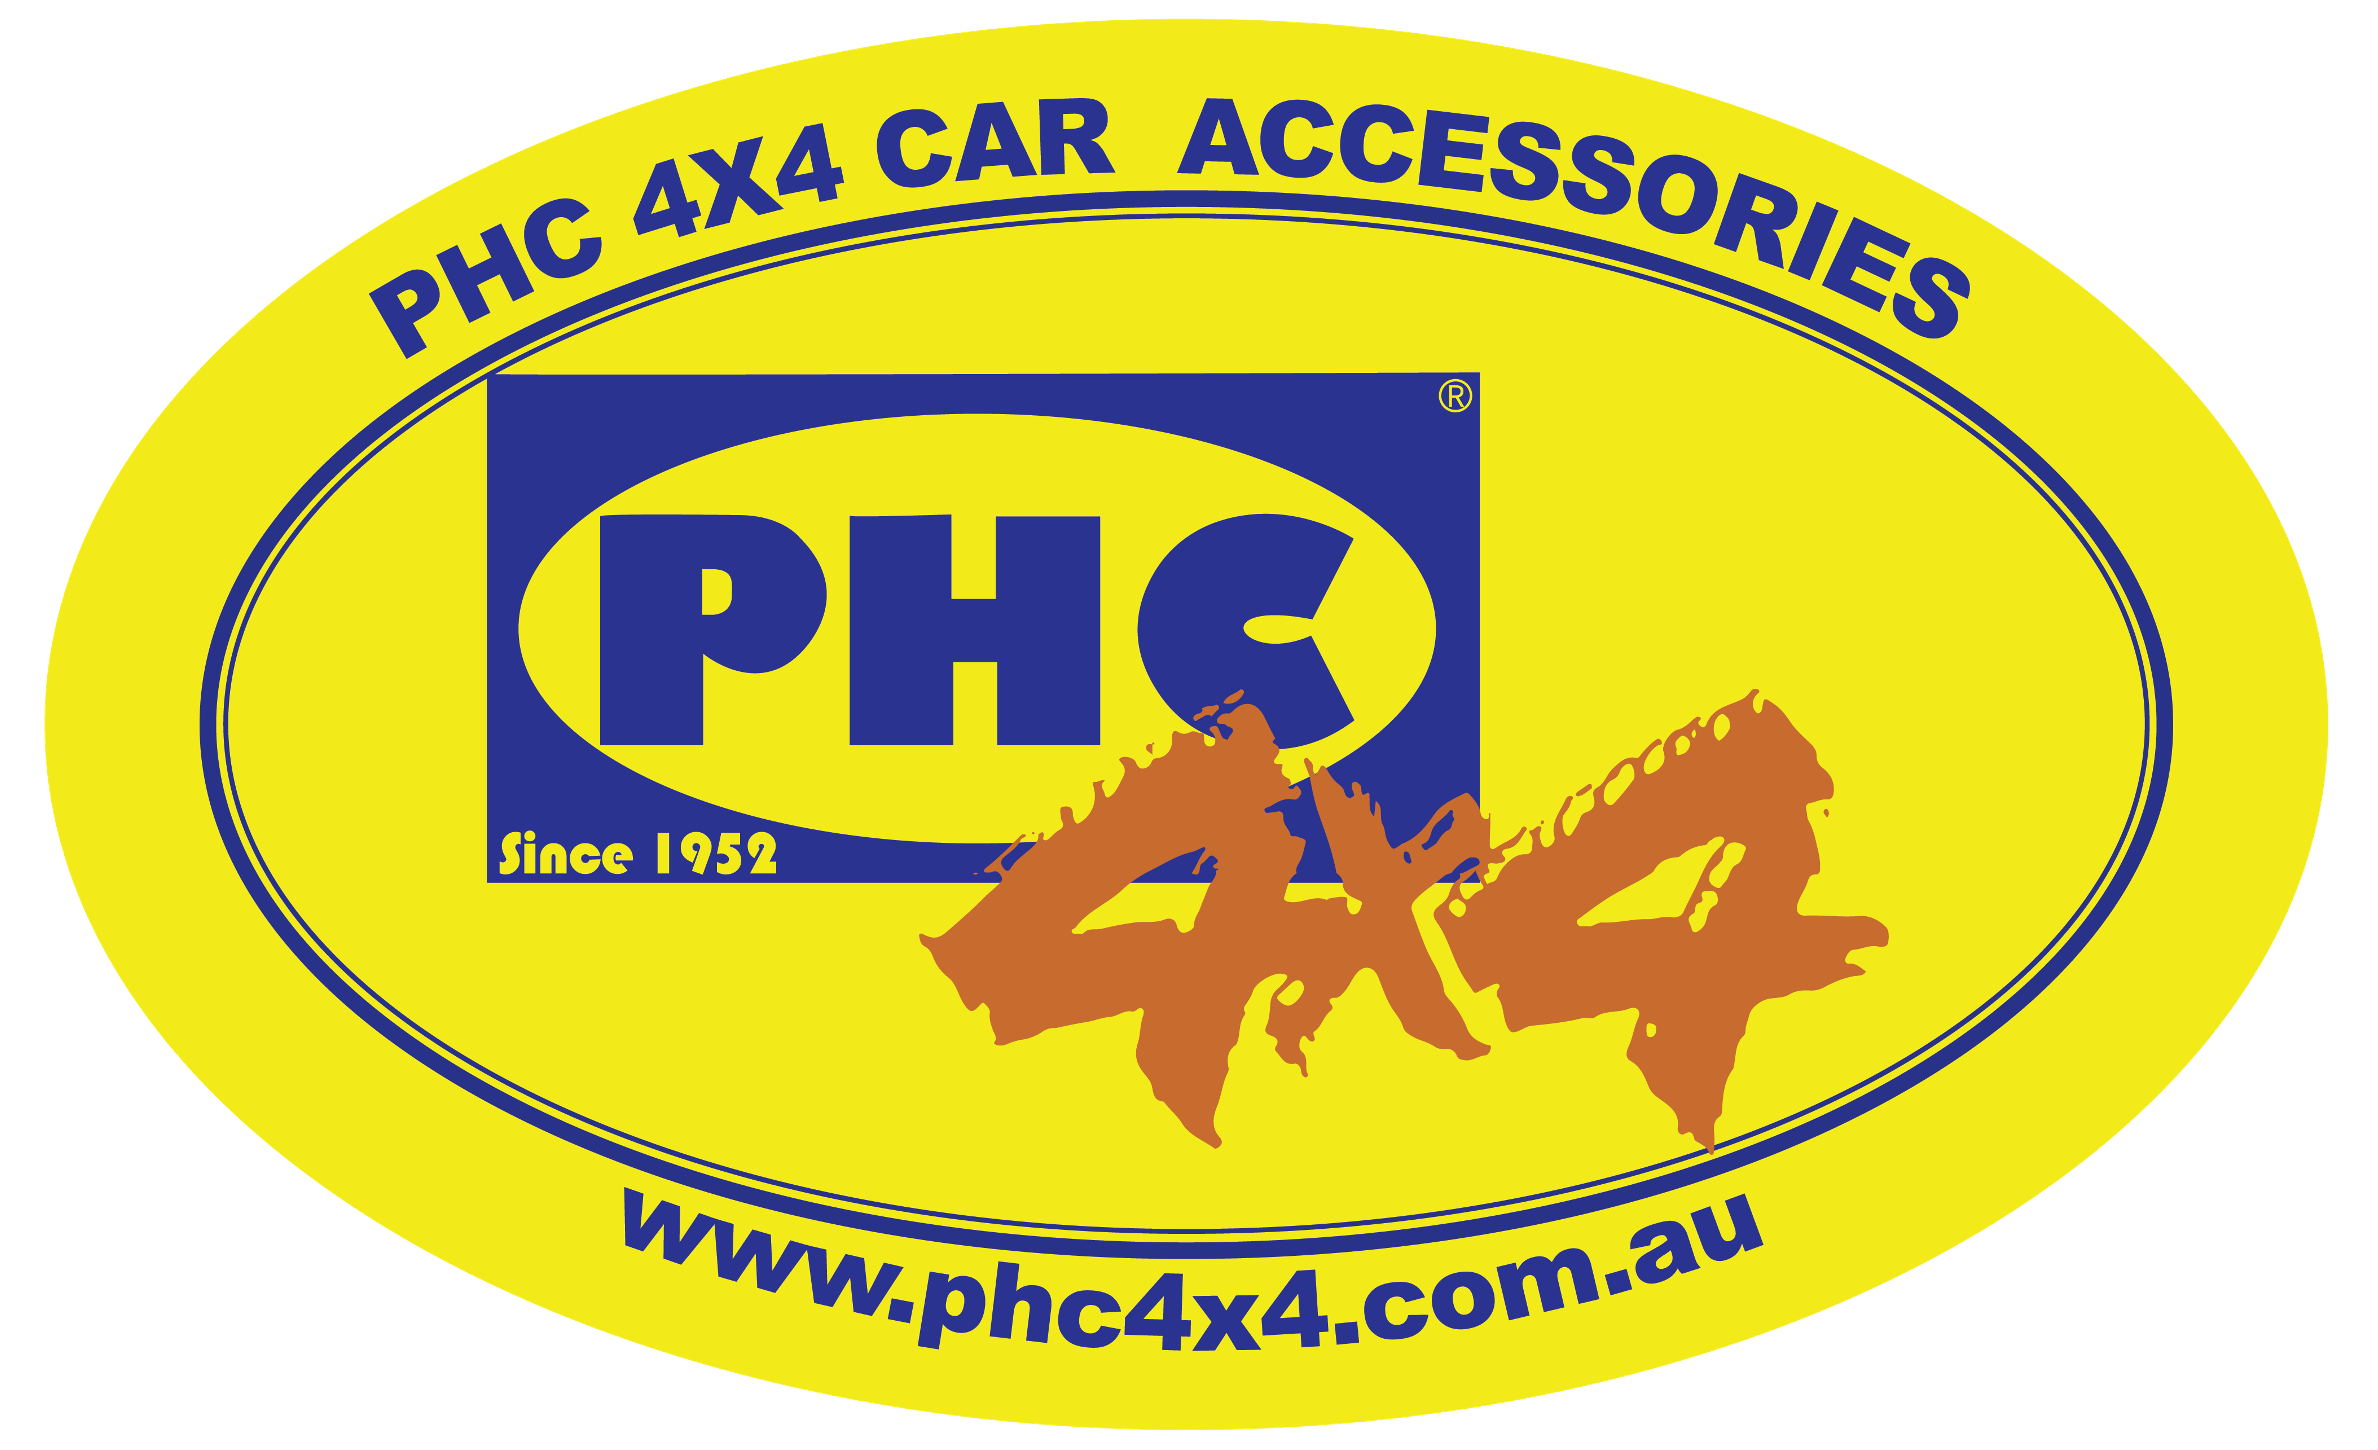 PHC 4x4 CAR ACCESSORIES 